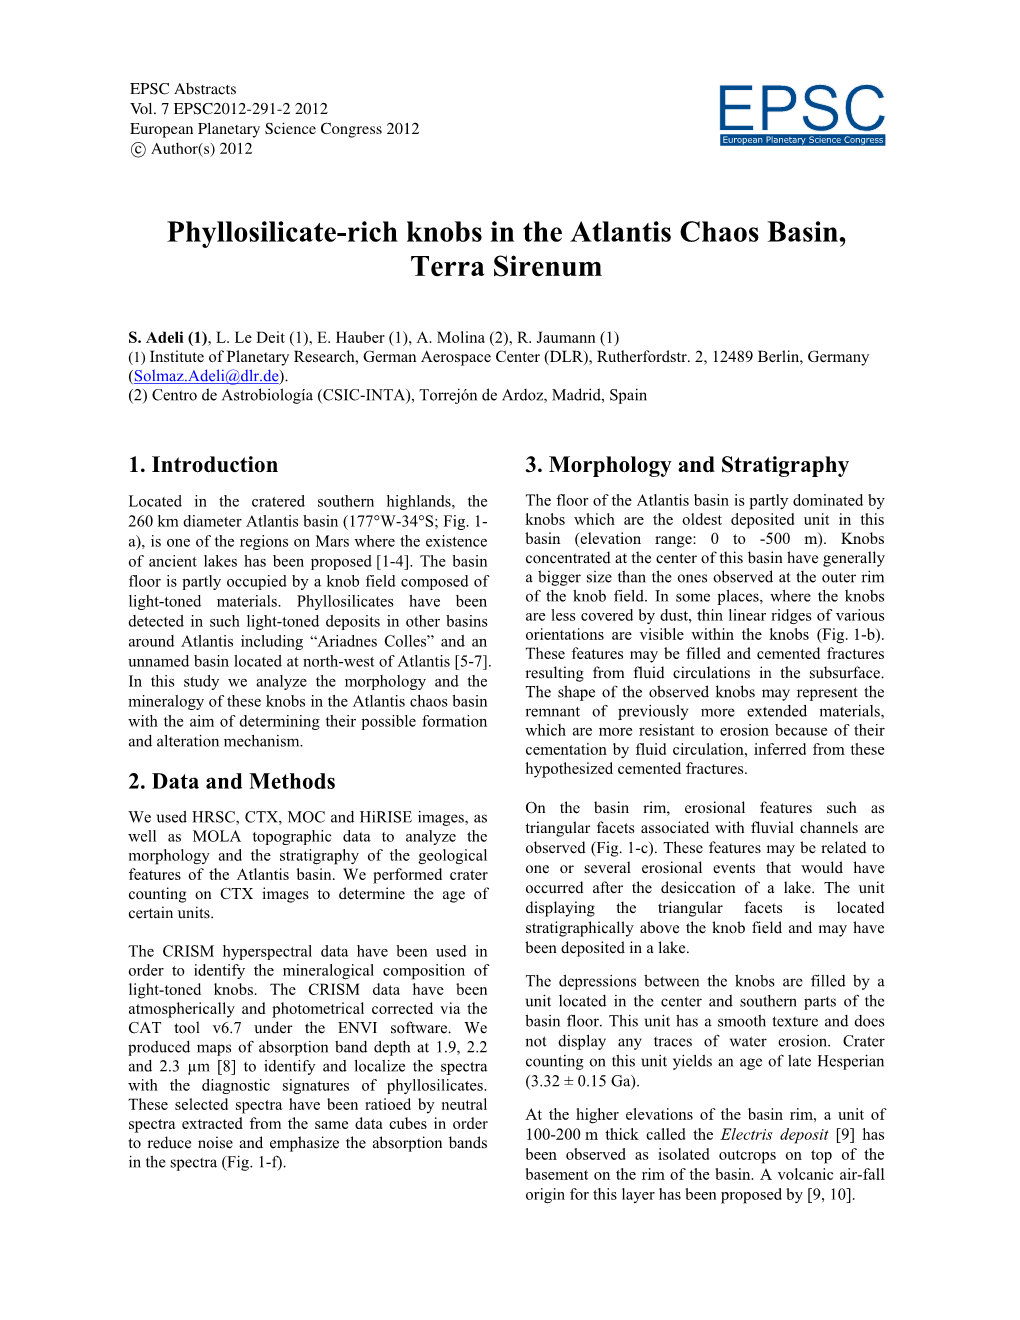 Phyllosilicate-Rich Knobs in the Atlantis Chaos Basin, Terra Sirenum